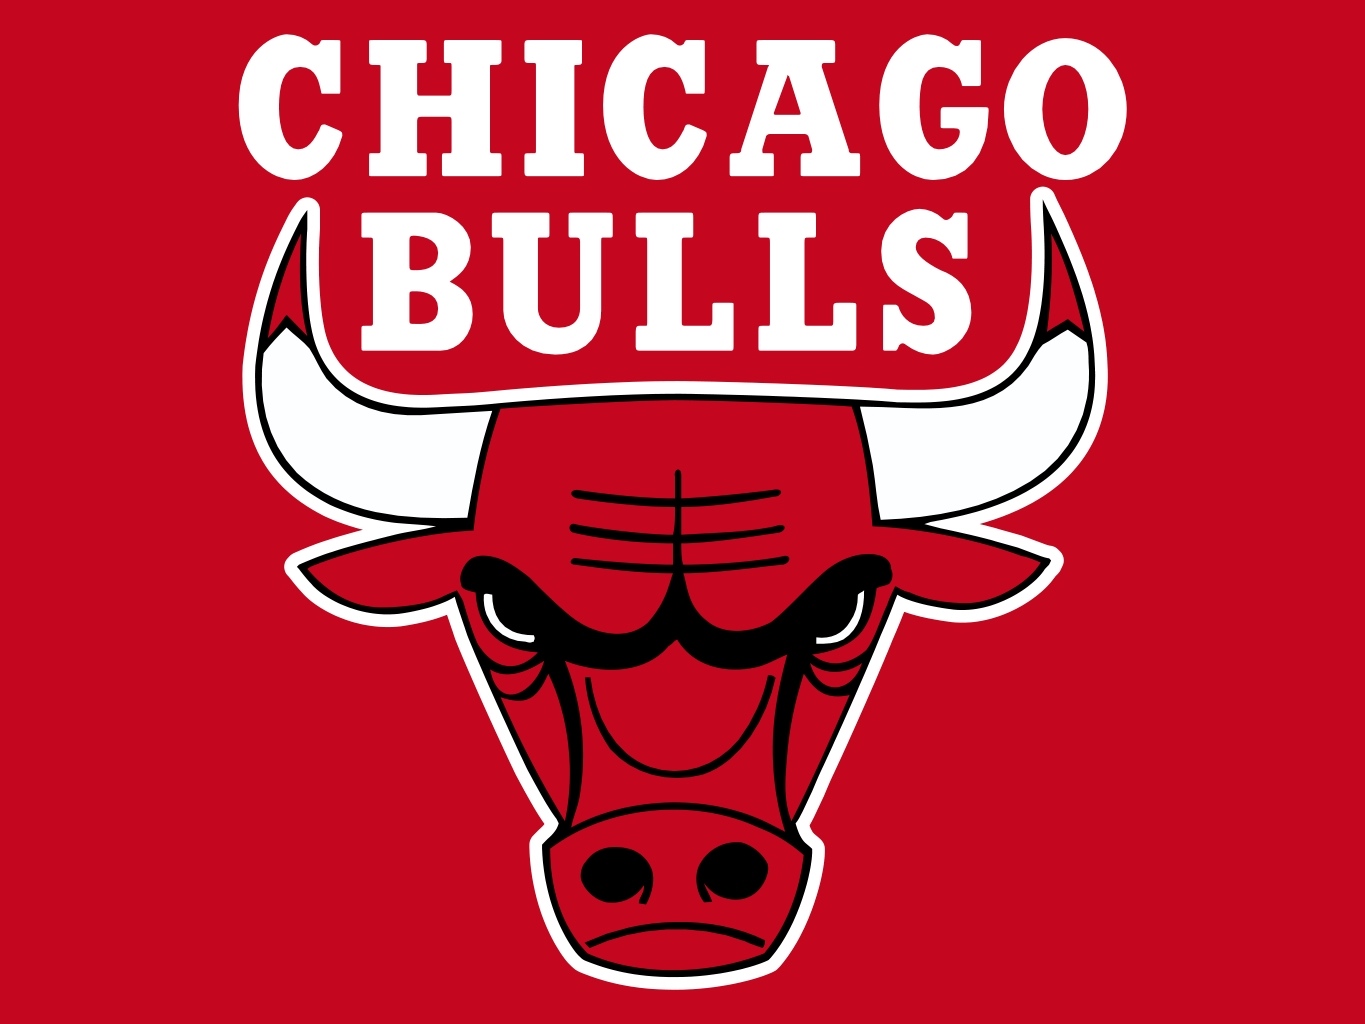 Chicago Bulls news